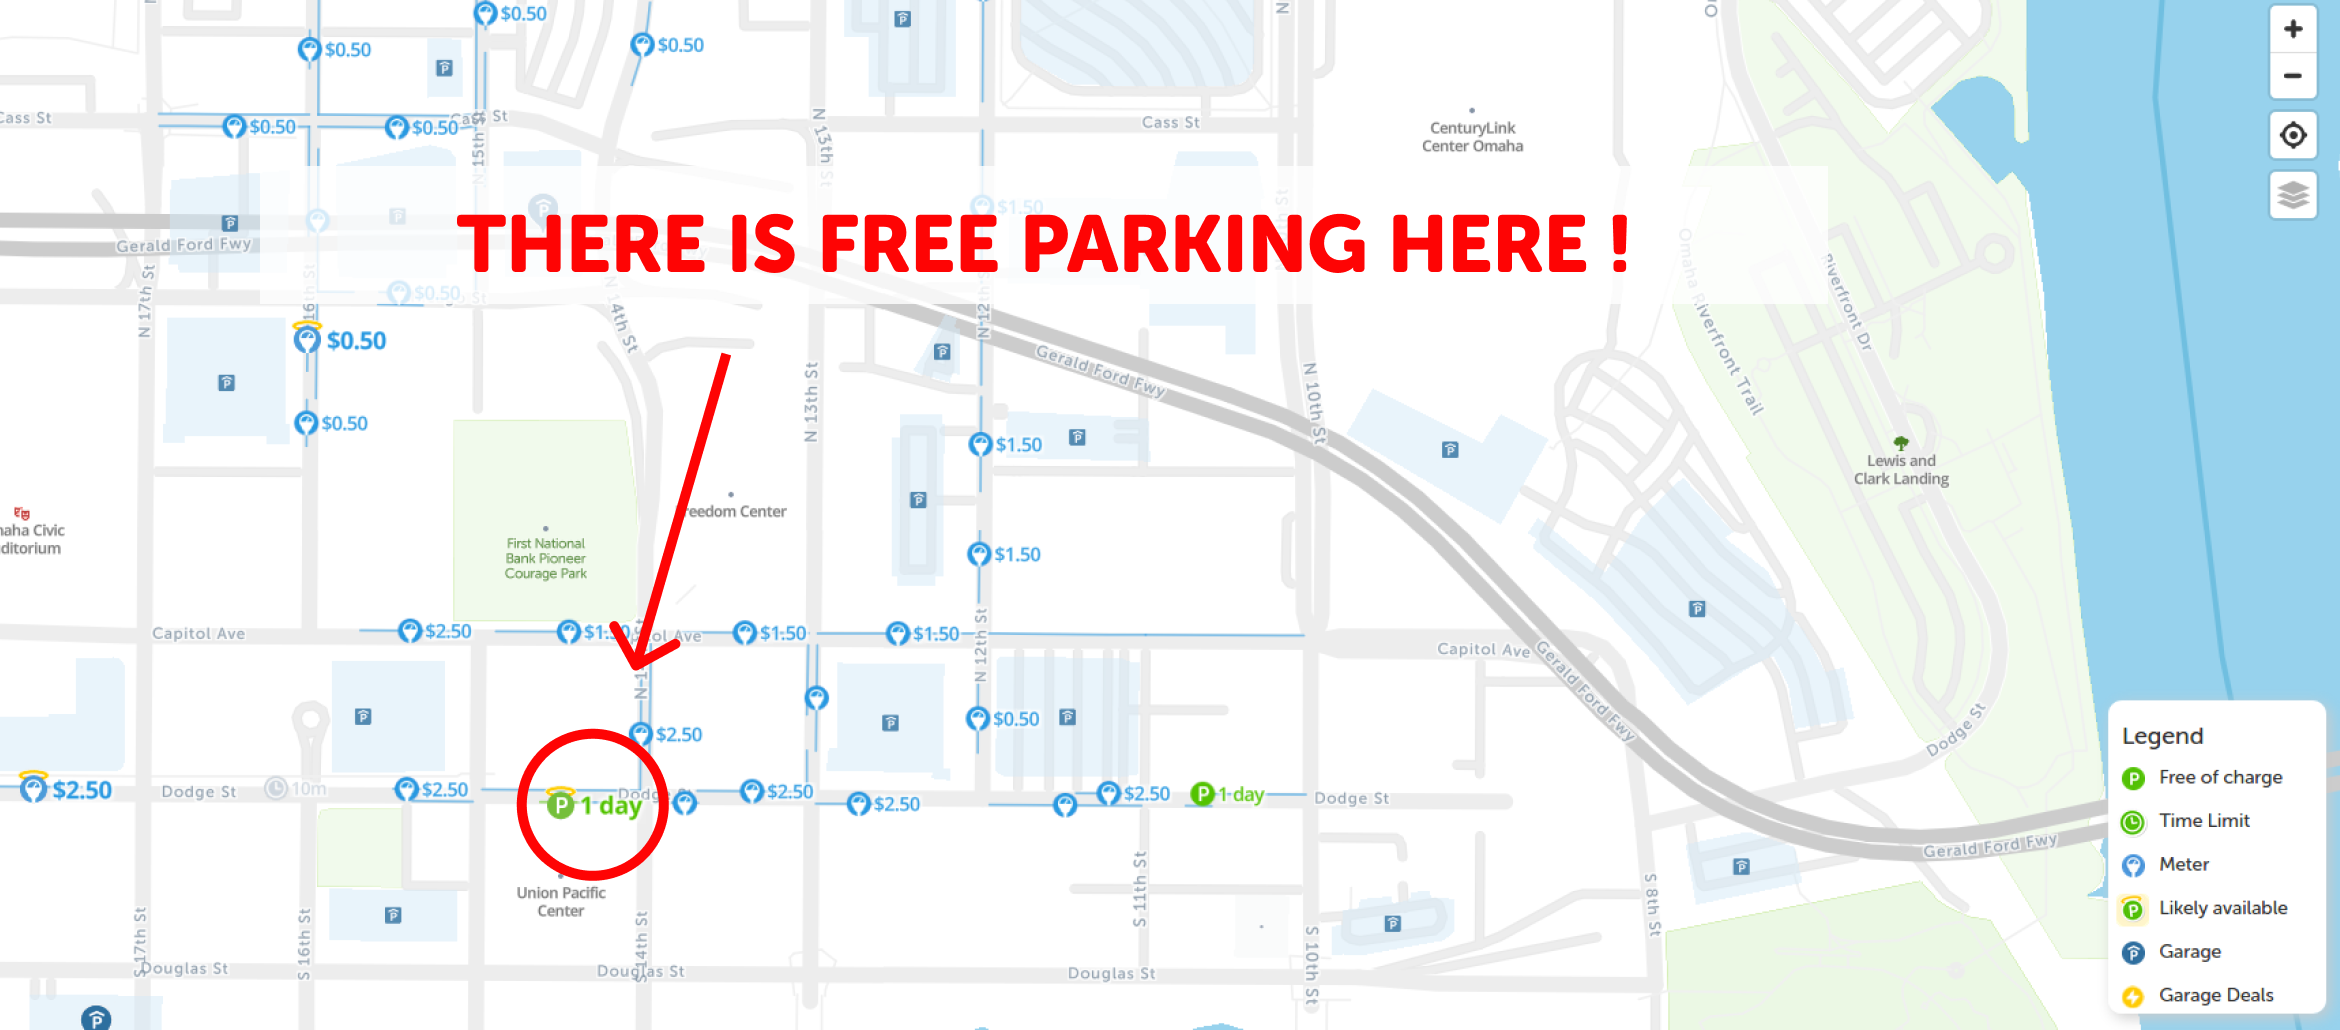 map of free parking in Omaha - SpotAngels